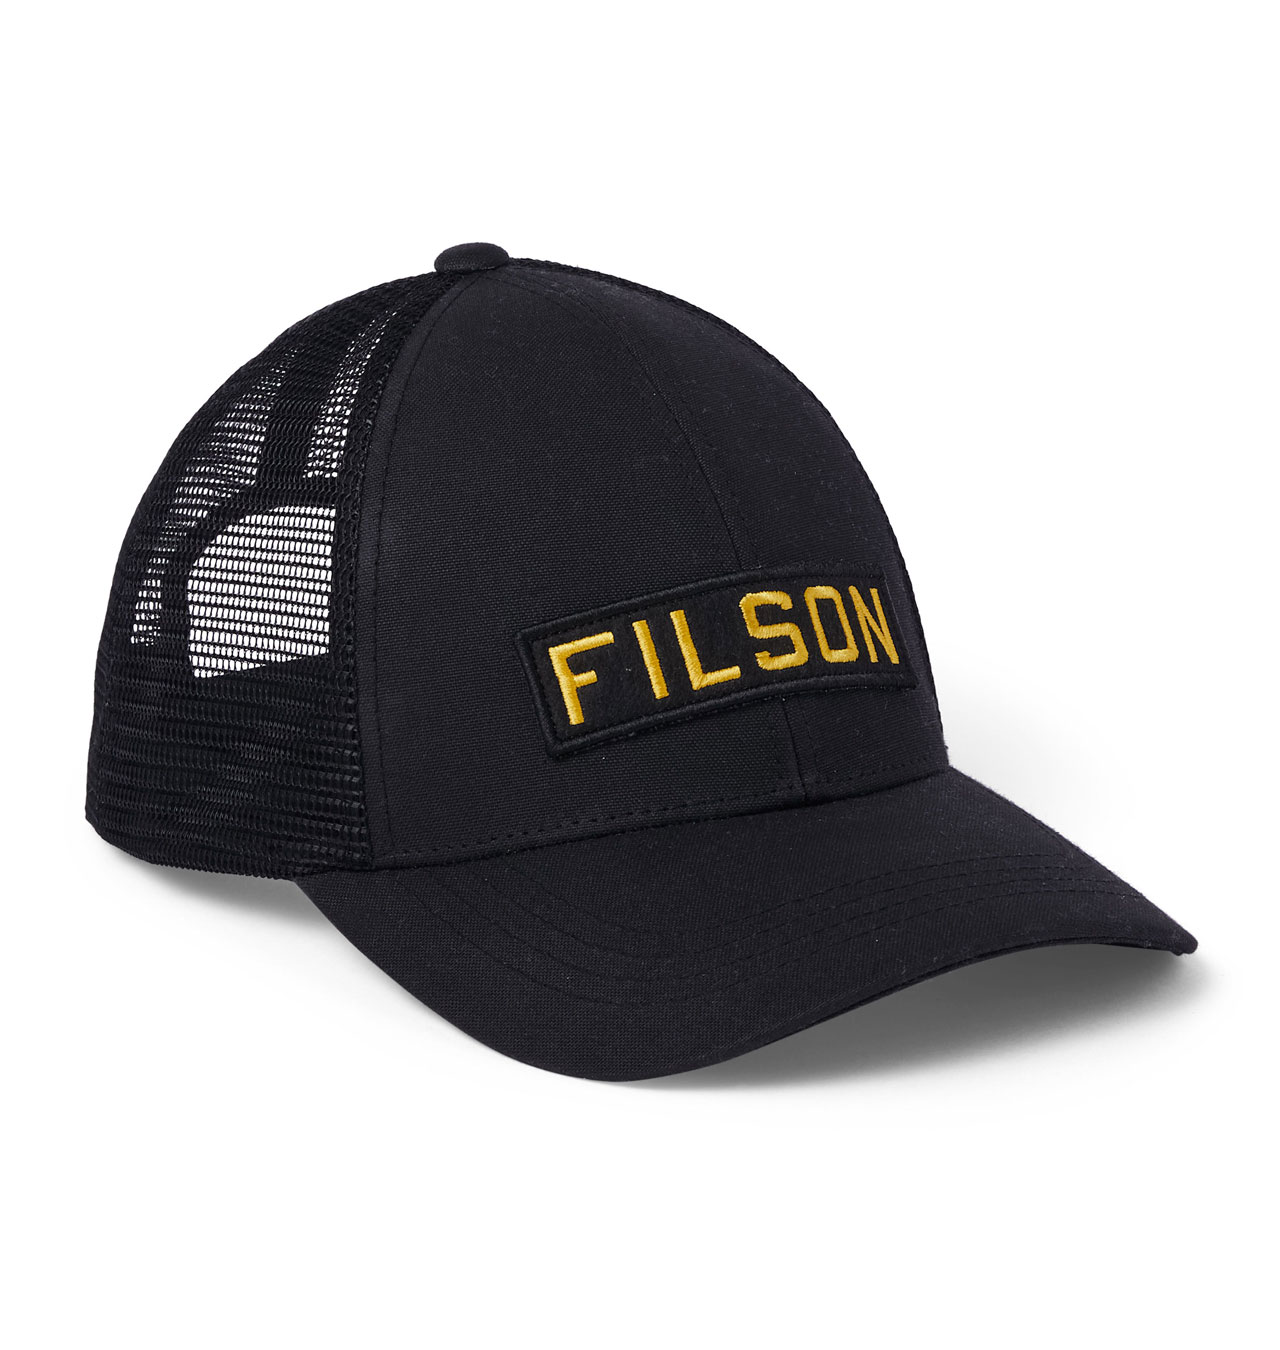 Filson - Logger Mesh Snapback Cap - Black